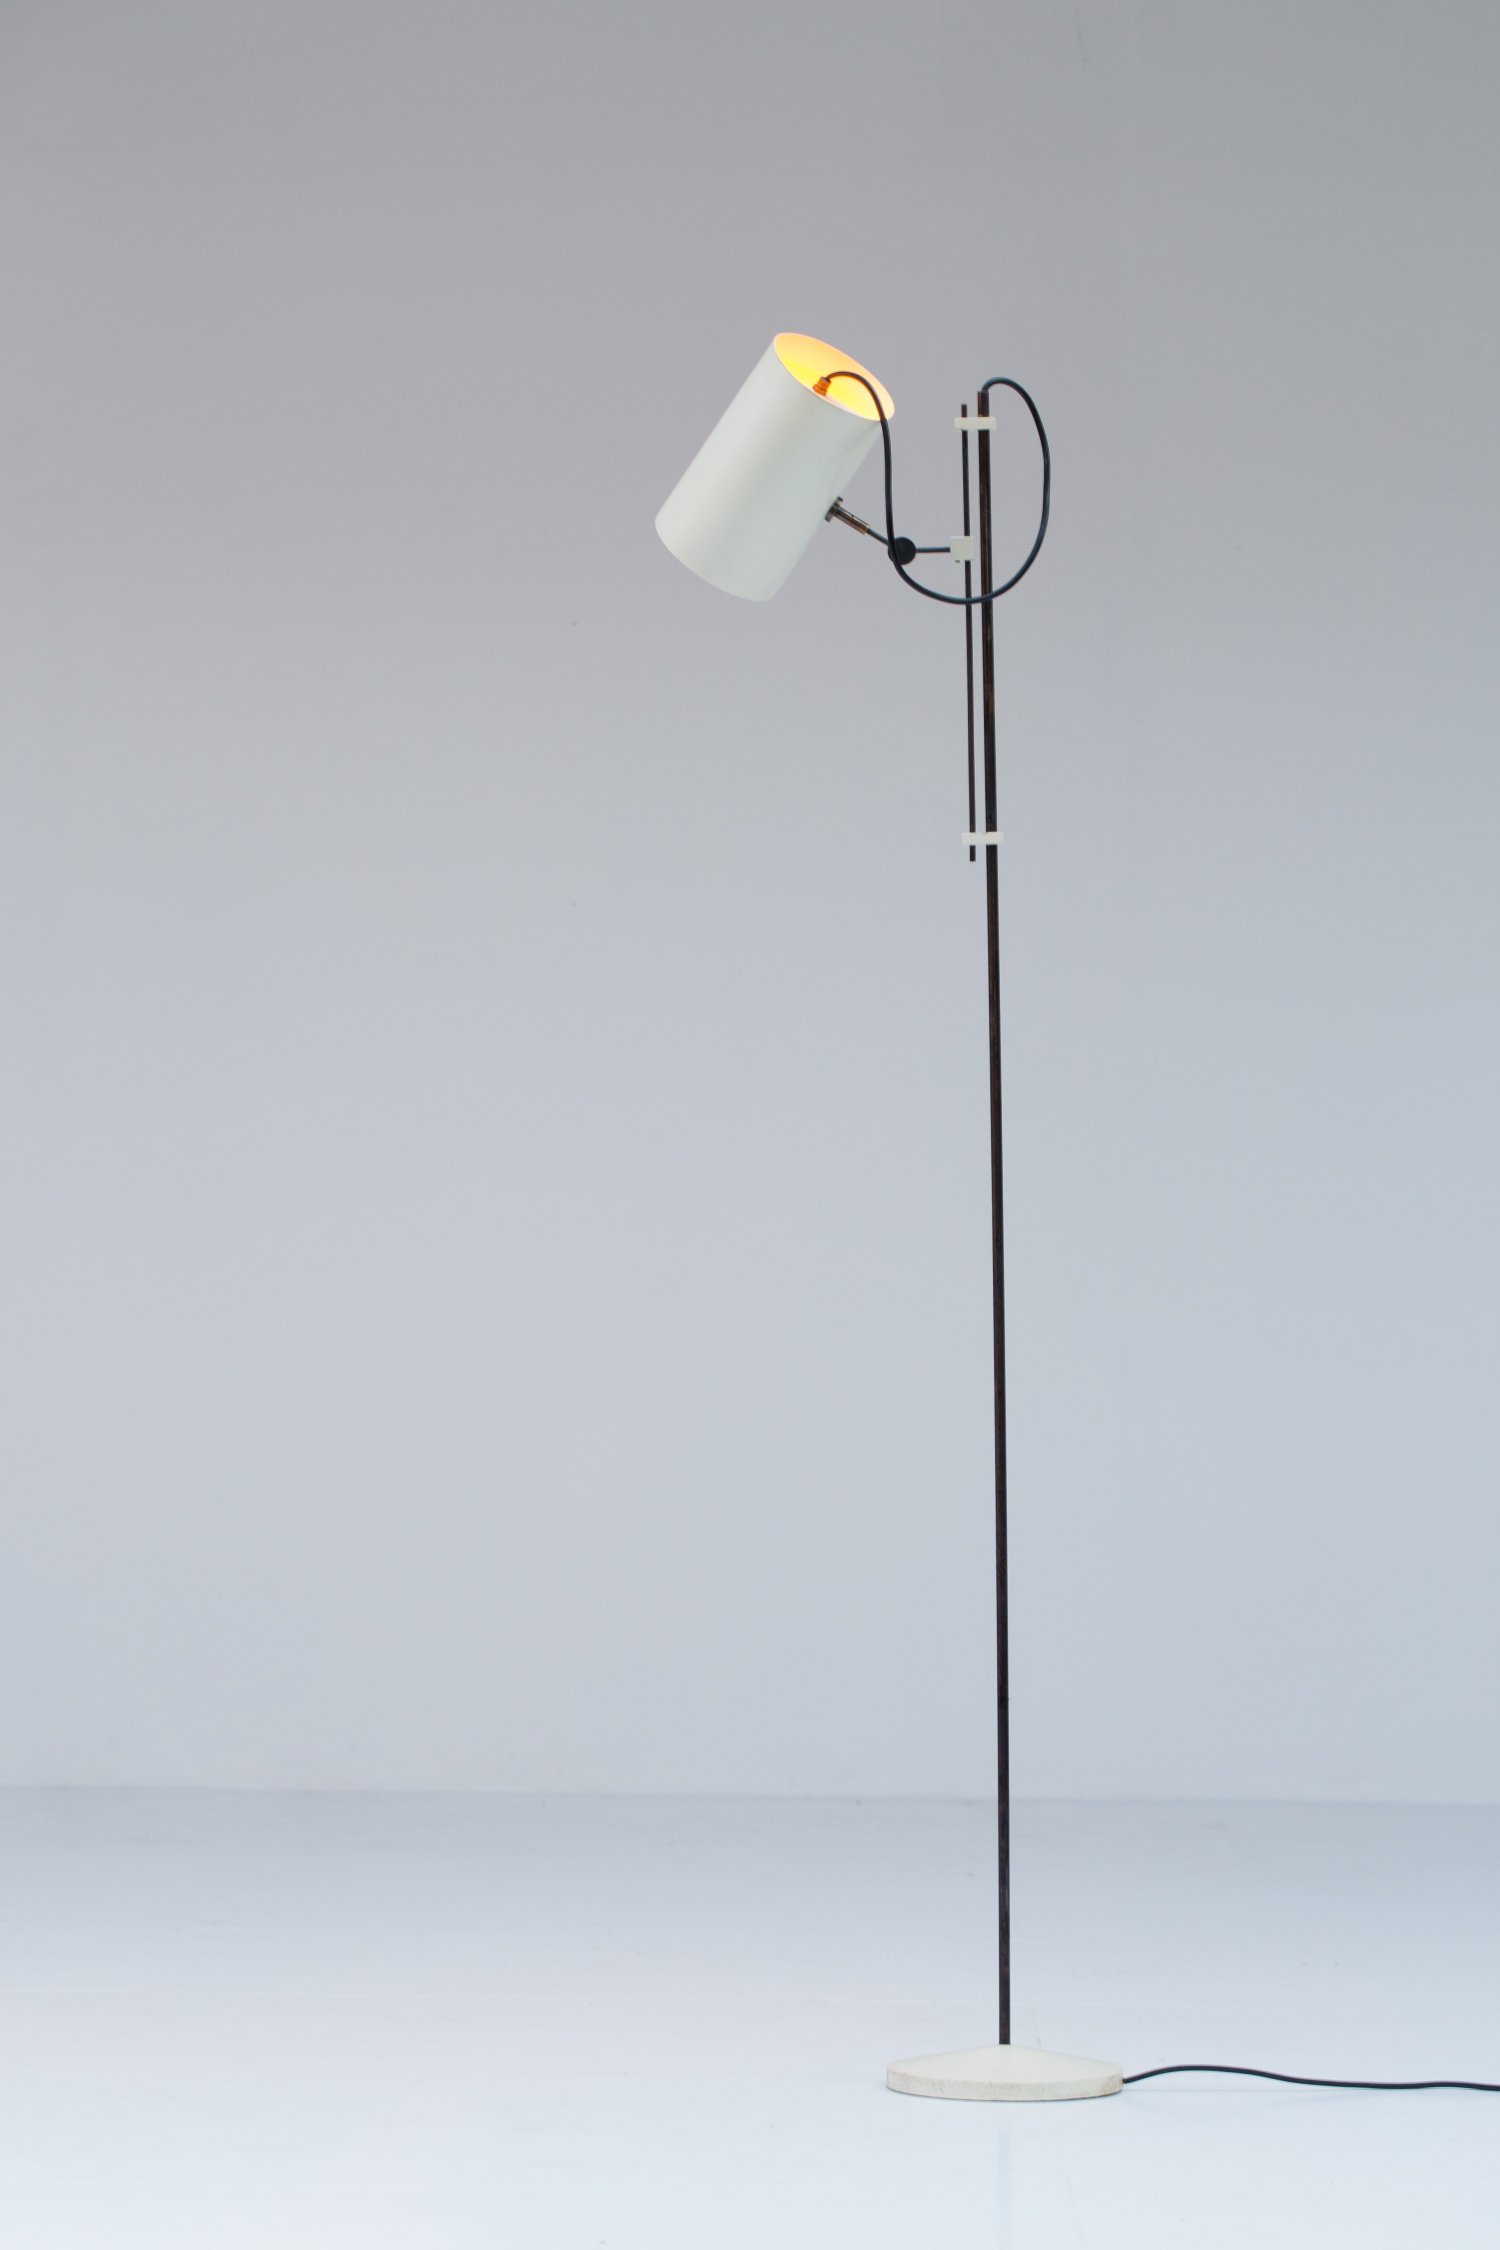 Giuseppe Ostuni floorlamp 1955